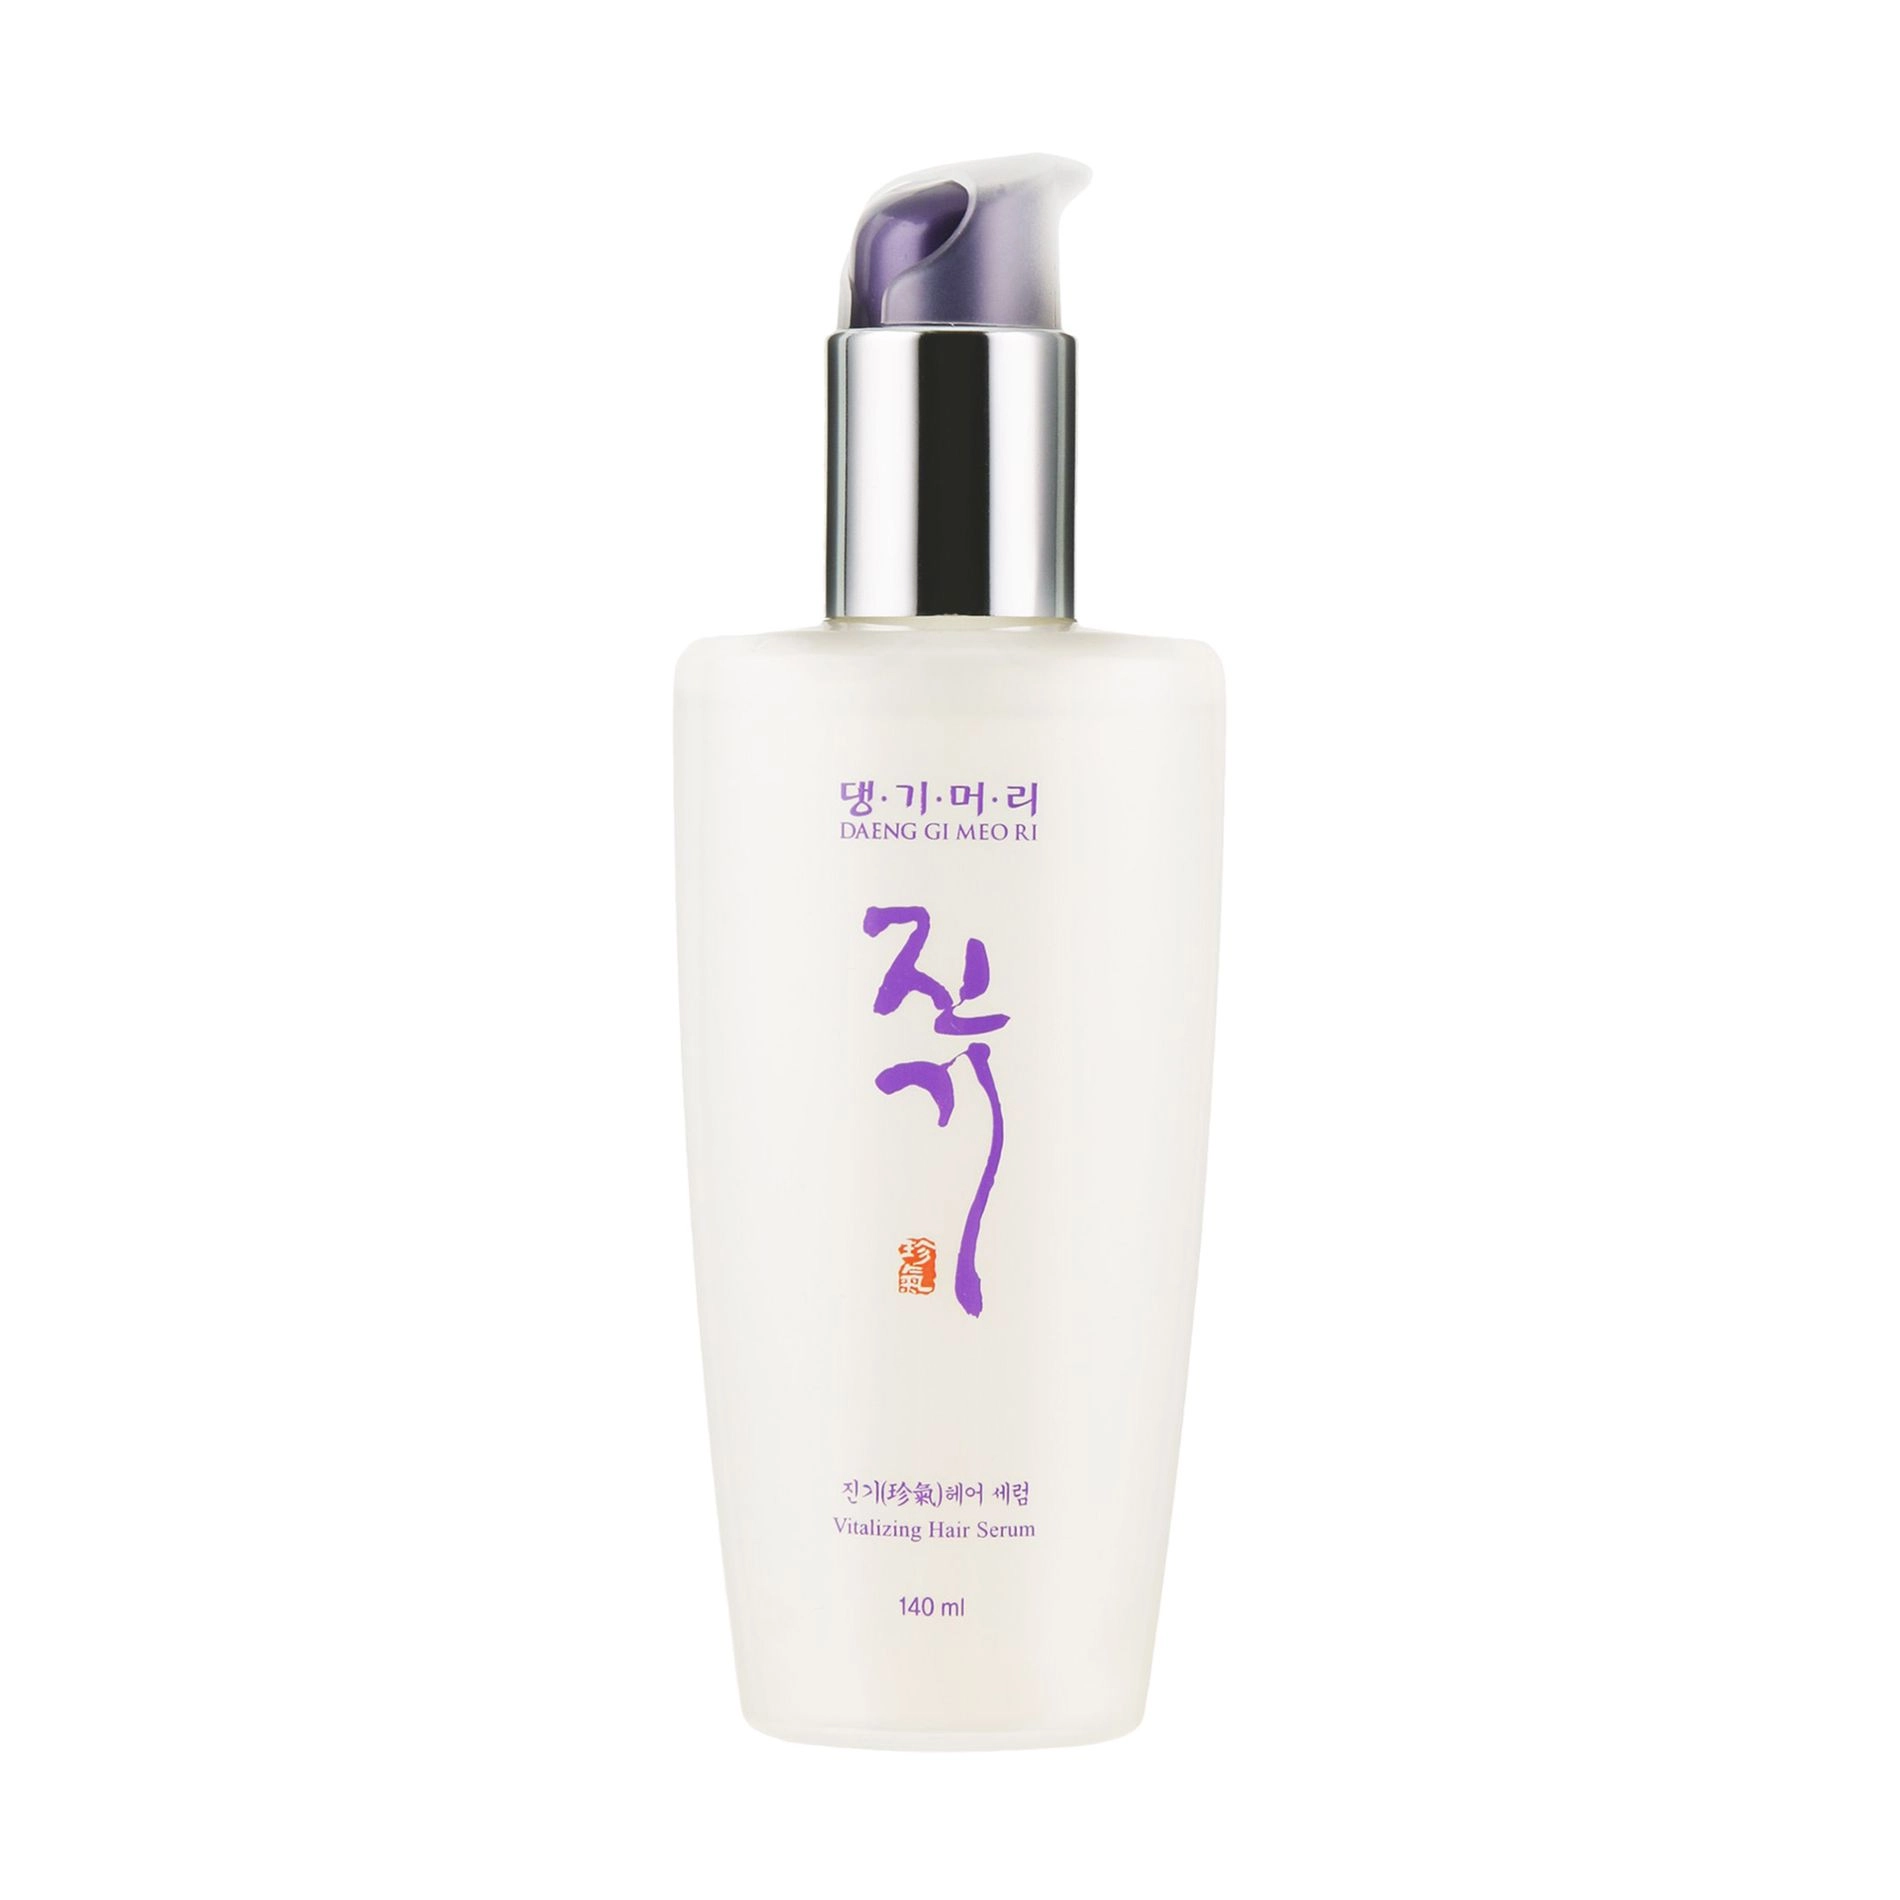 Восстанавливающая сыворотка для волос - Daeng Gi Meo Ri Vitalizing Hair Serum, 140 мл - фото N3